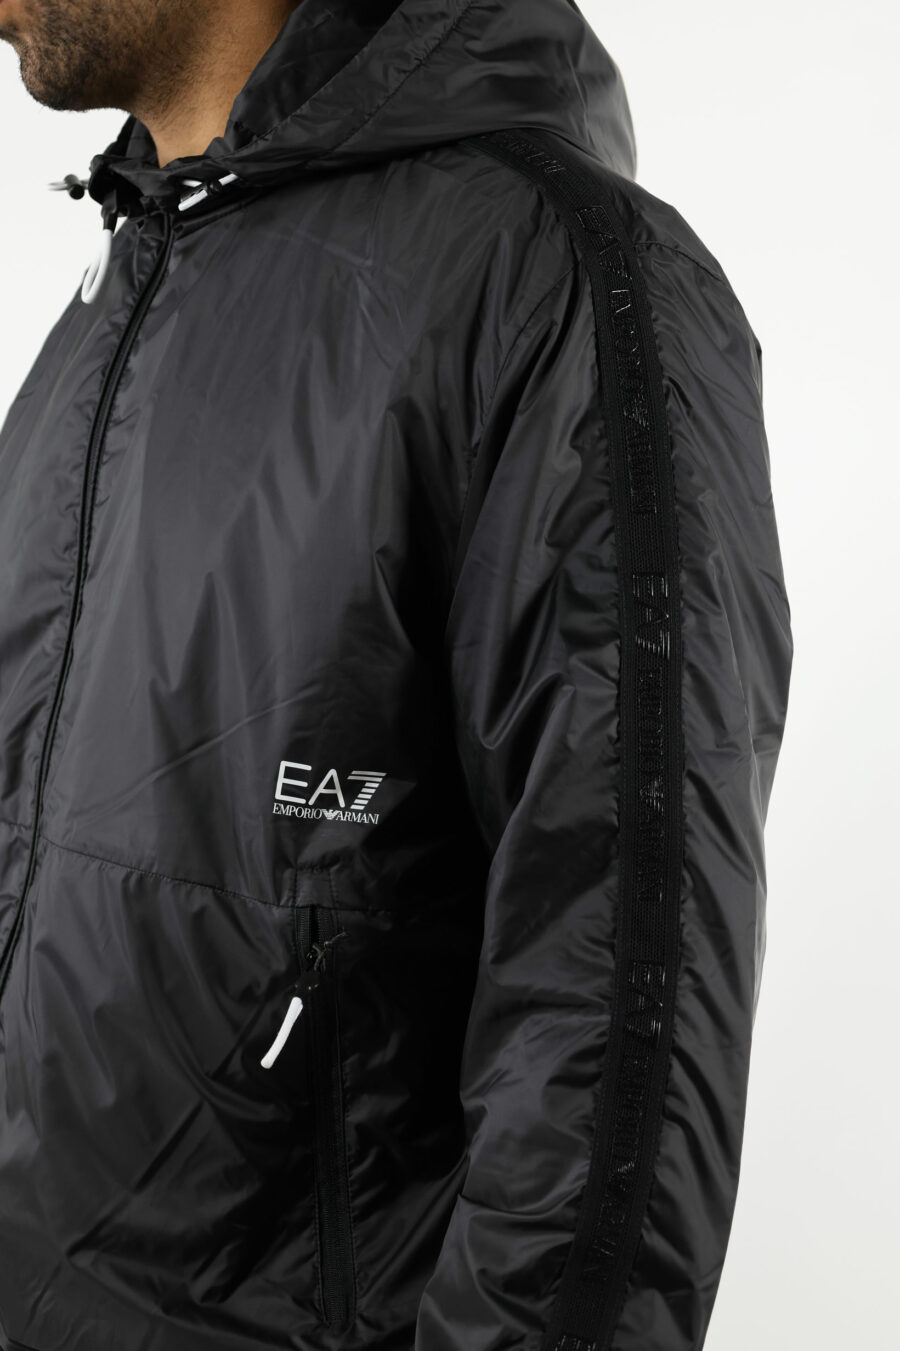 Chaqueta negra impermeable con capucha lineas blancas laterales y logo "lux identity" - 110956